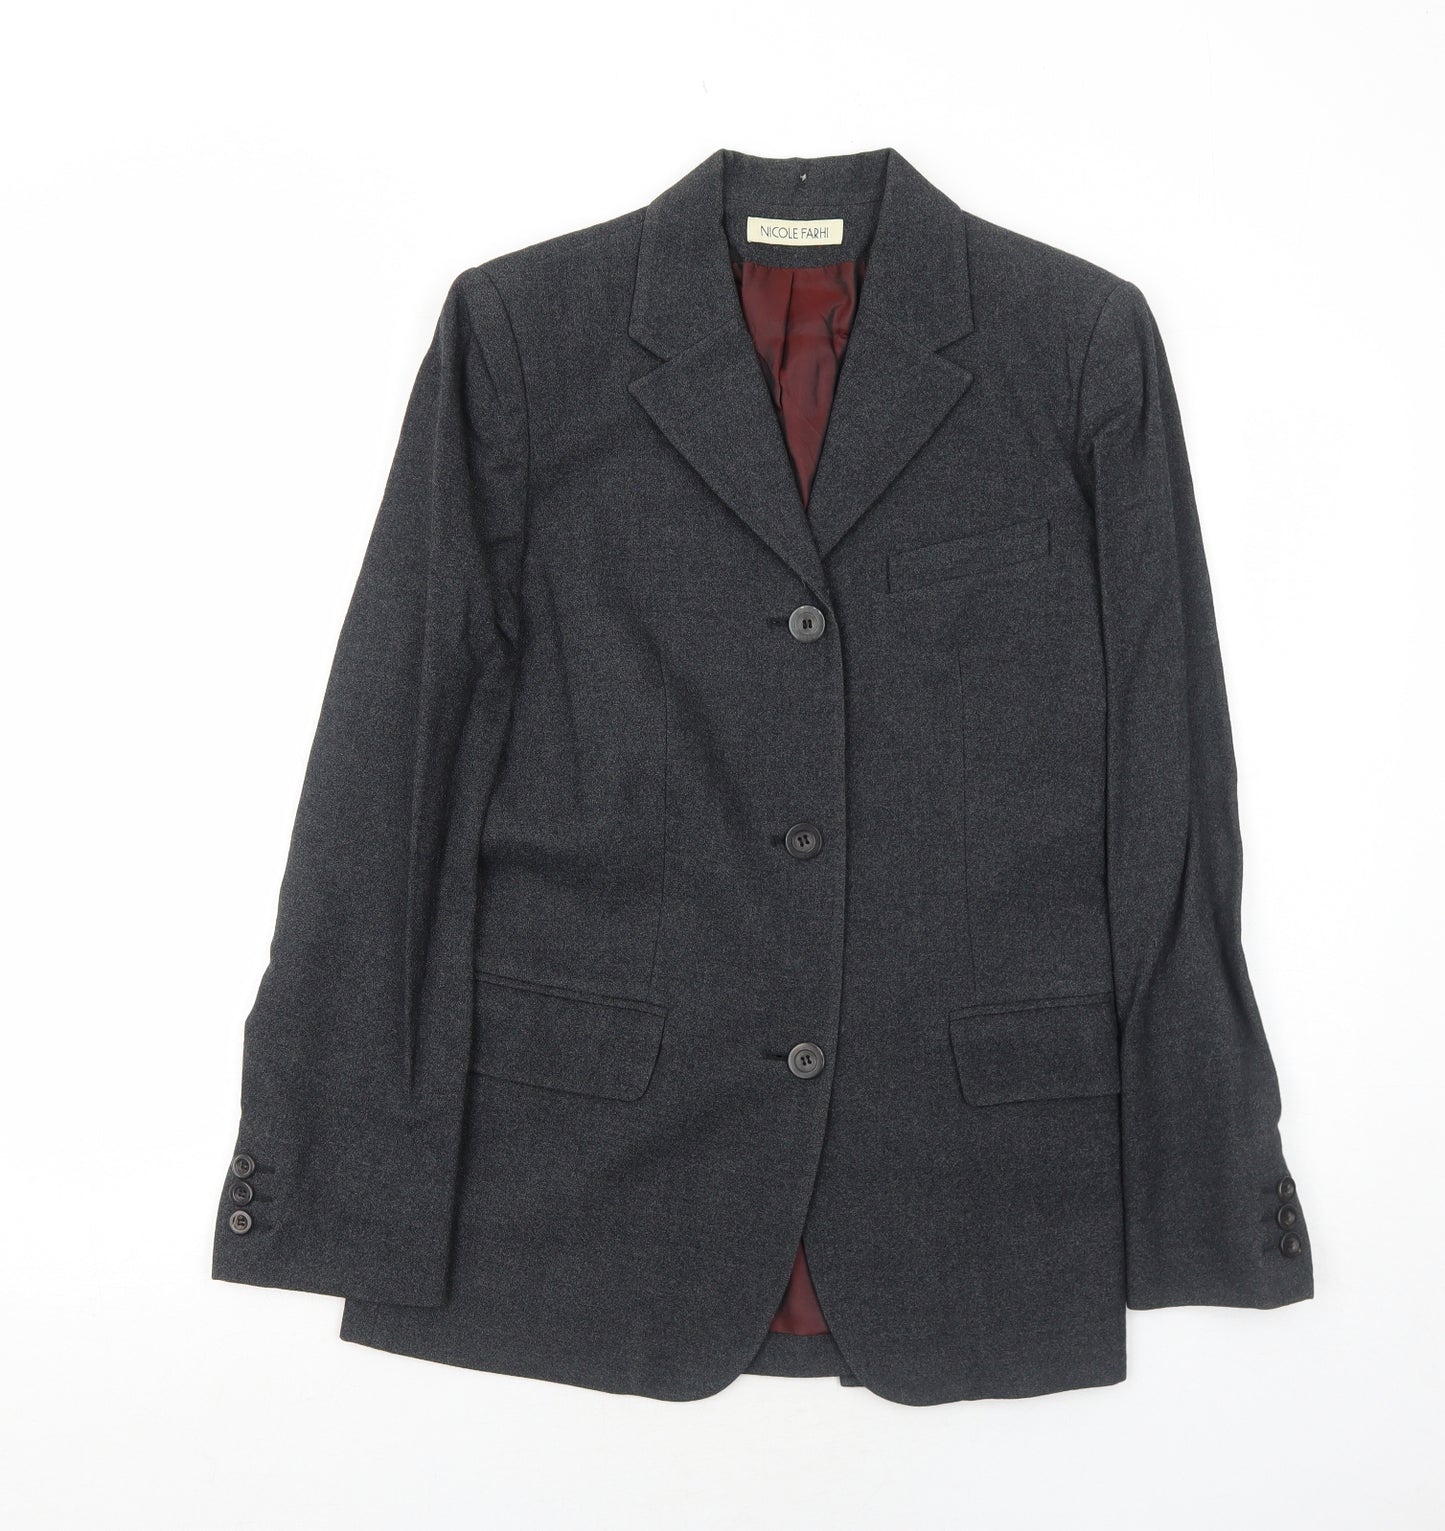 NICOLE FARHI Womens Grey Wool Jacket Suit Jacket Size 8